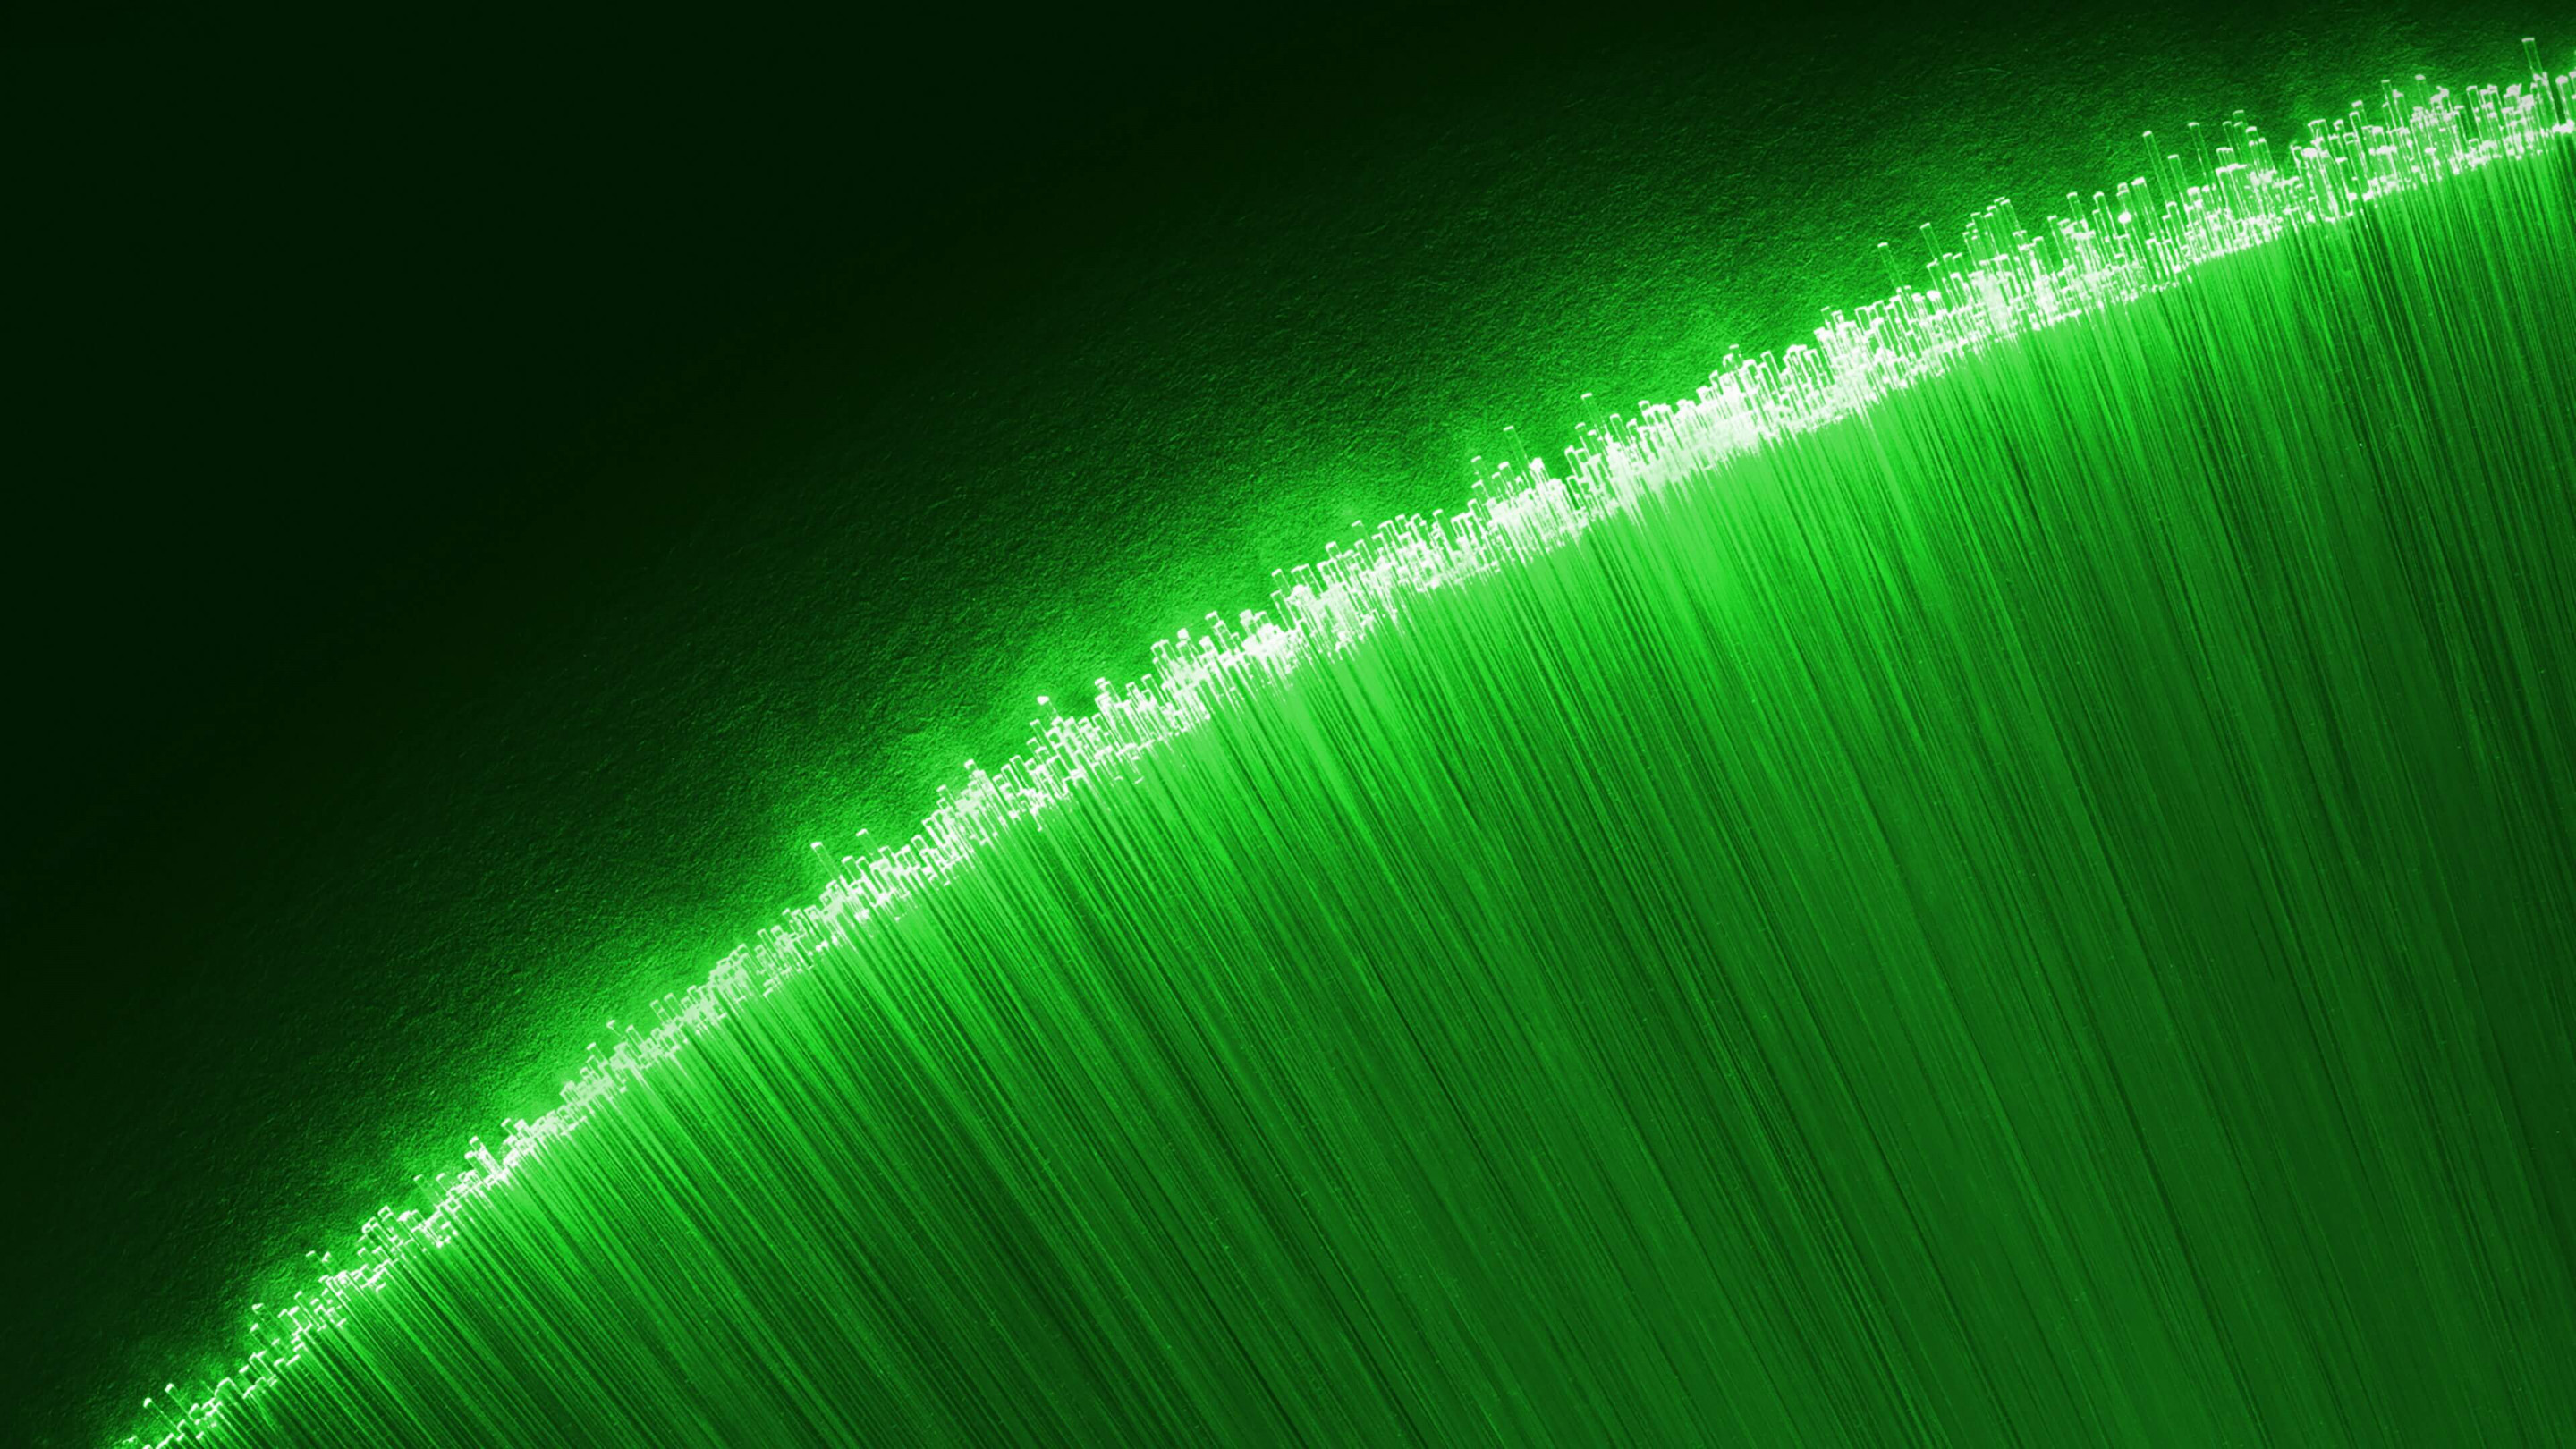 Green lights by Moto G7 wallpaper 2880x1620